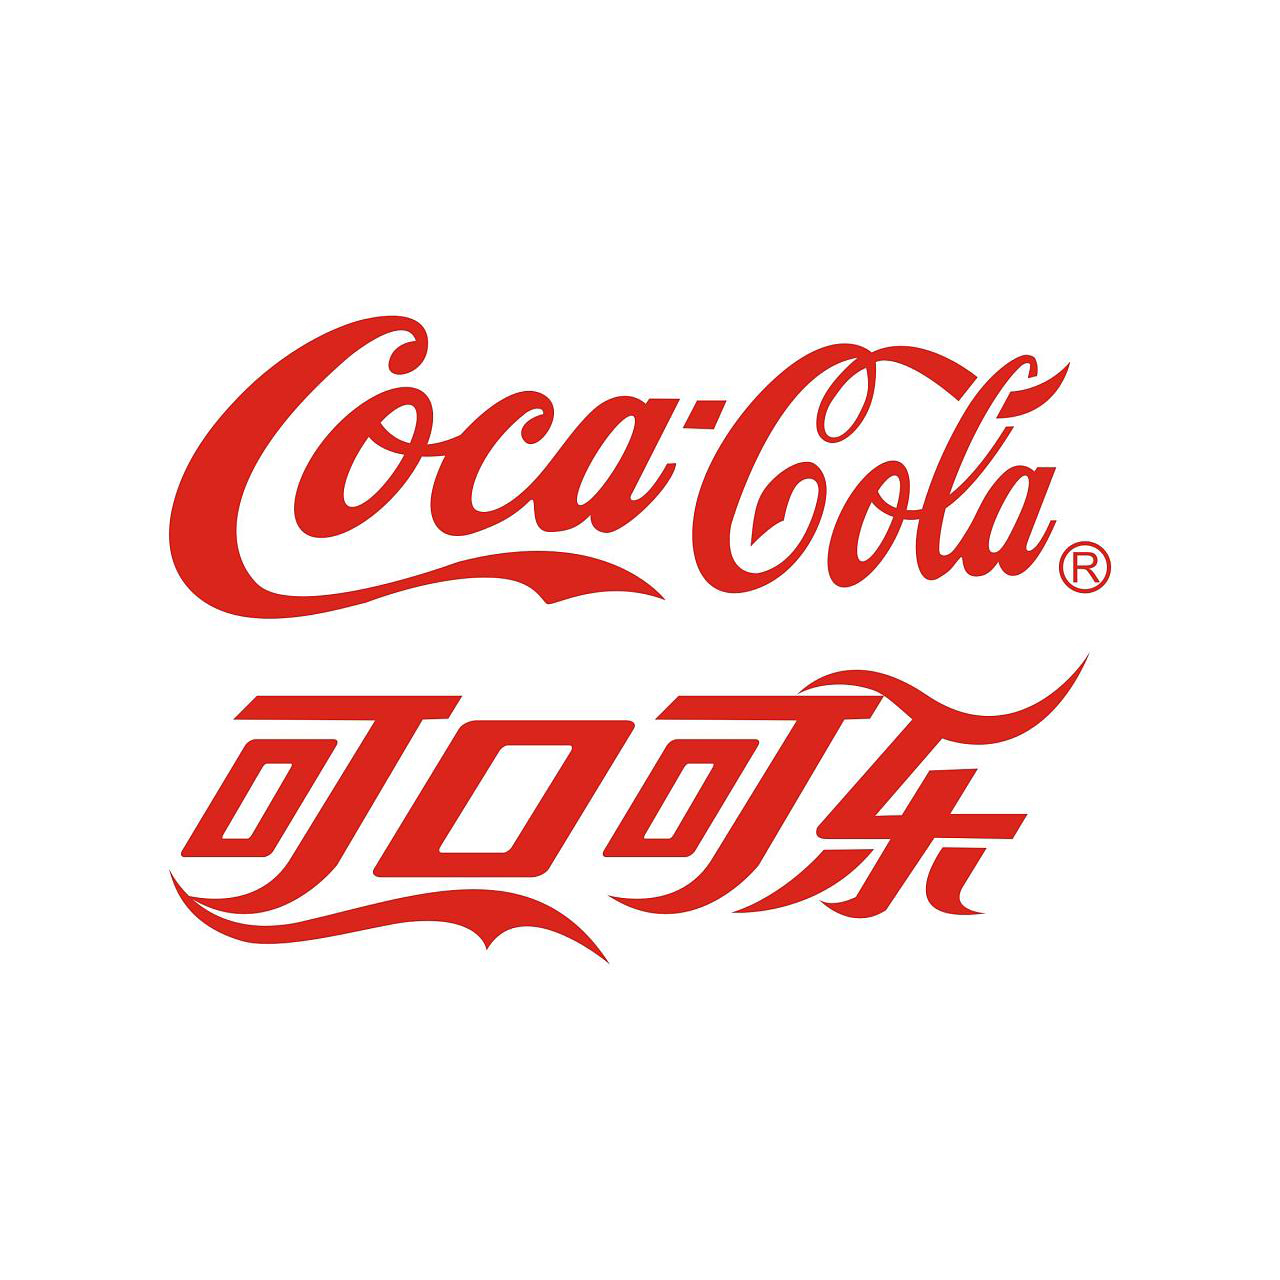 Chengdu Coca-Cola Factory